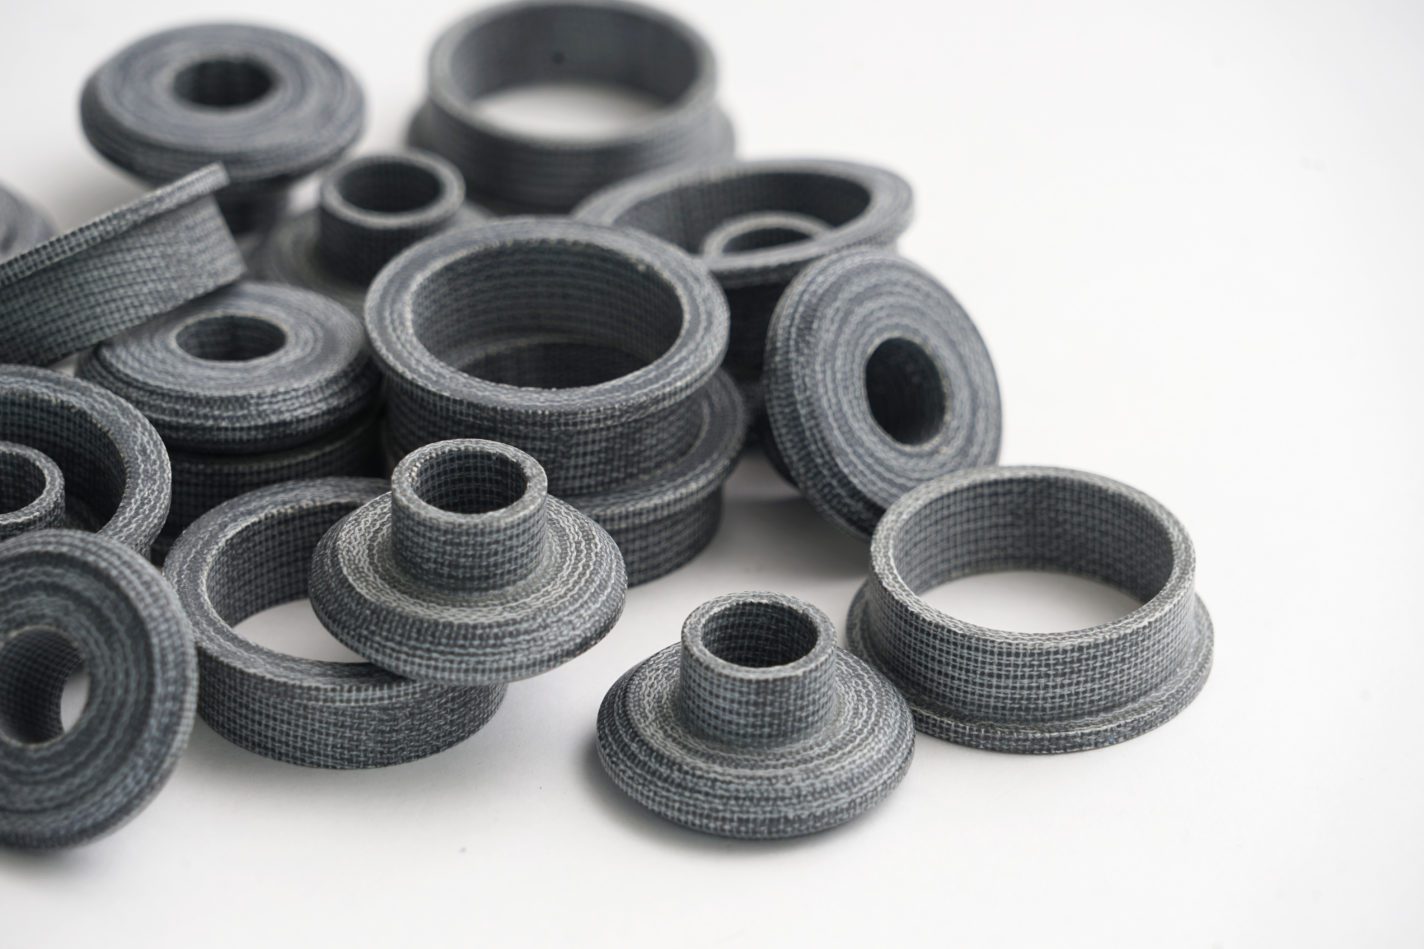 Composite bearing materials